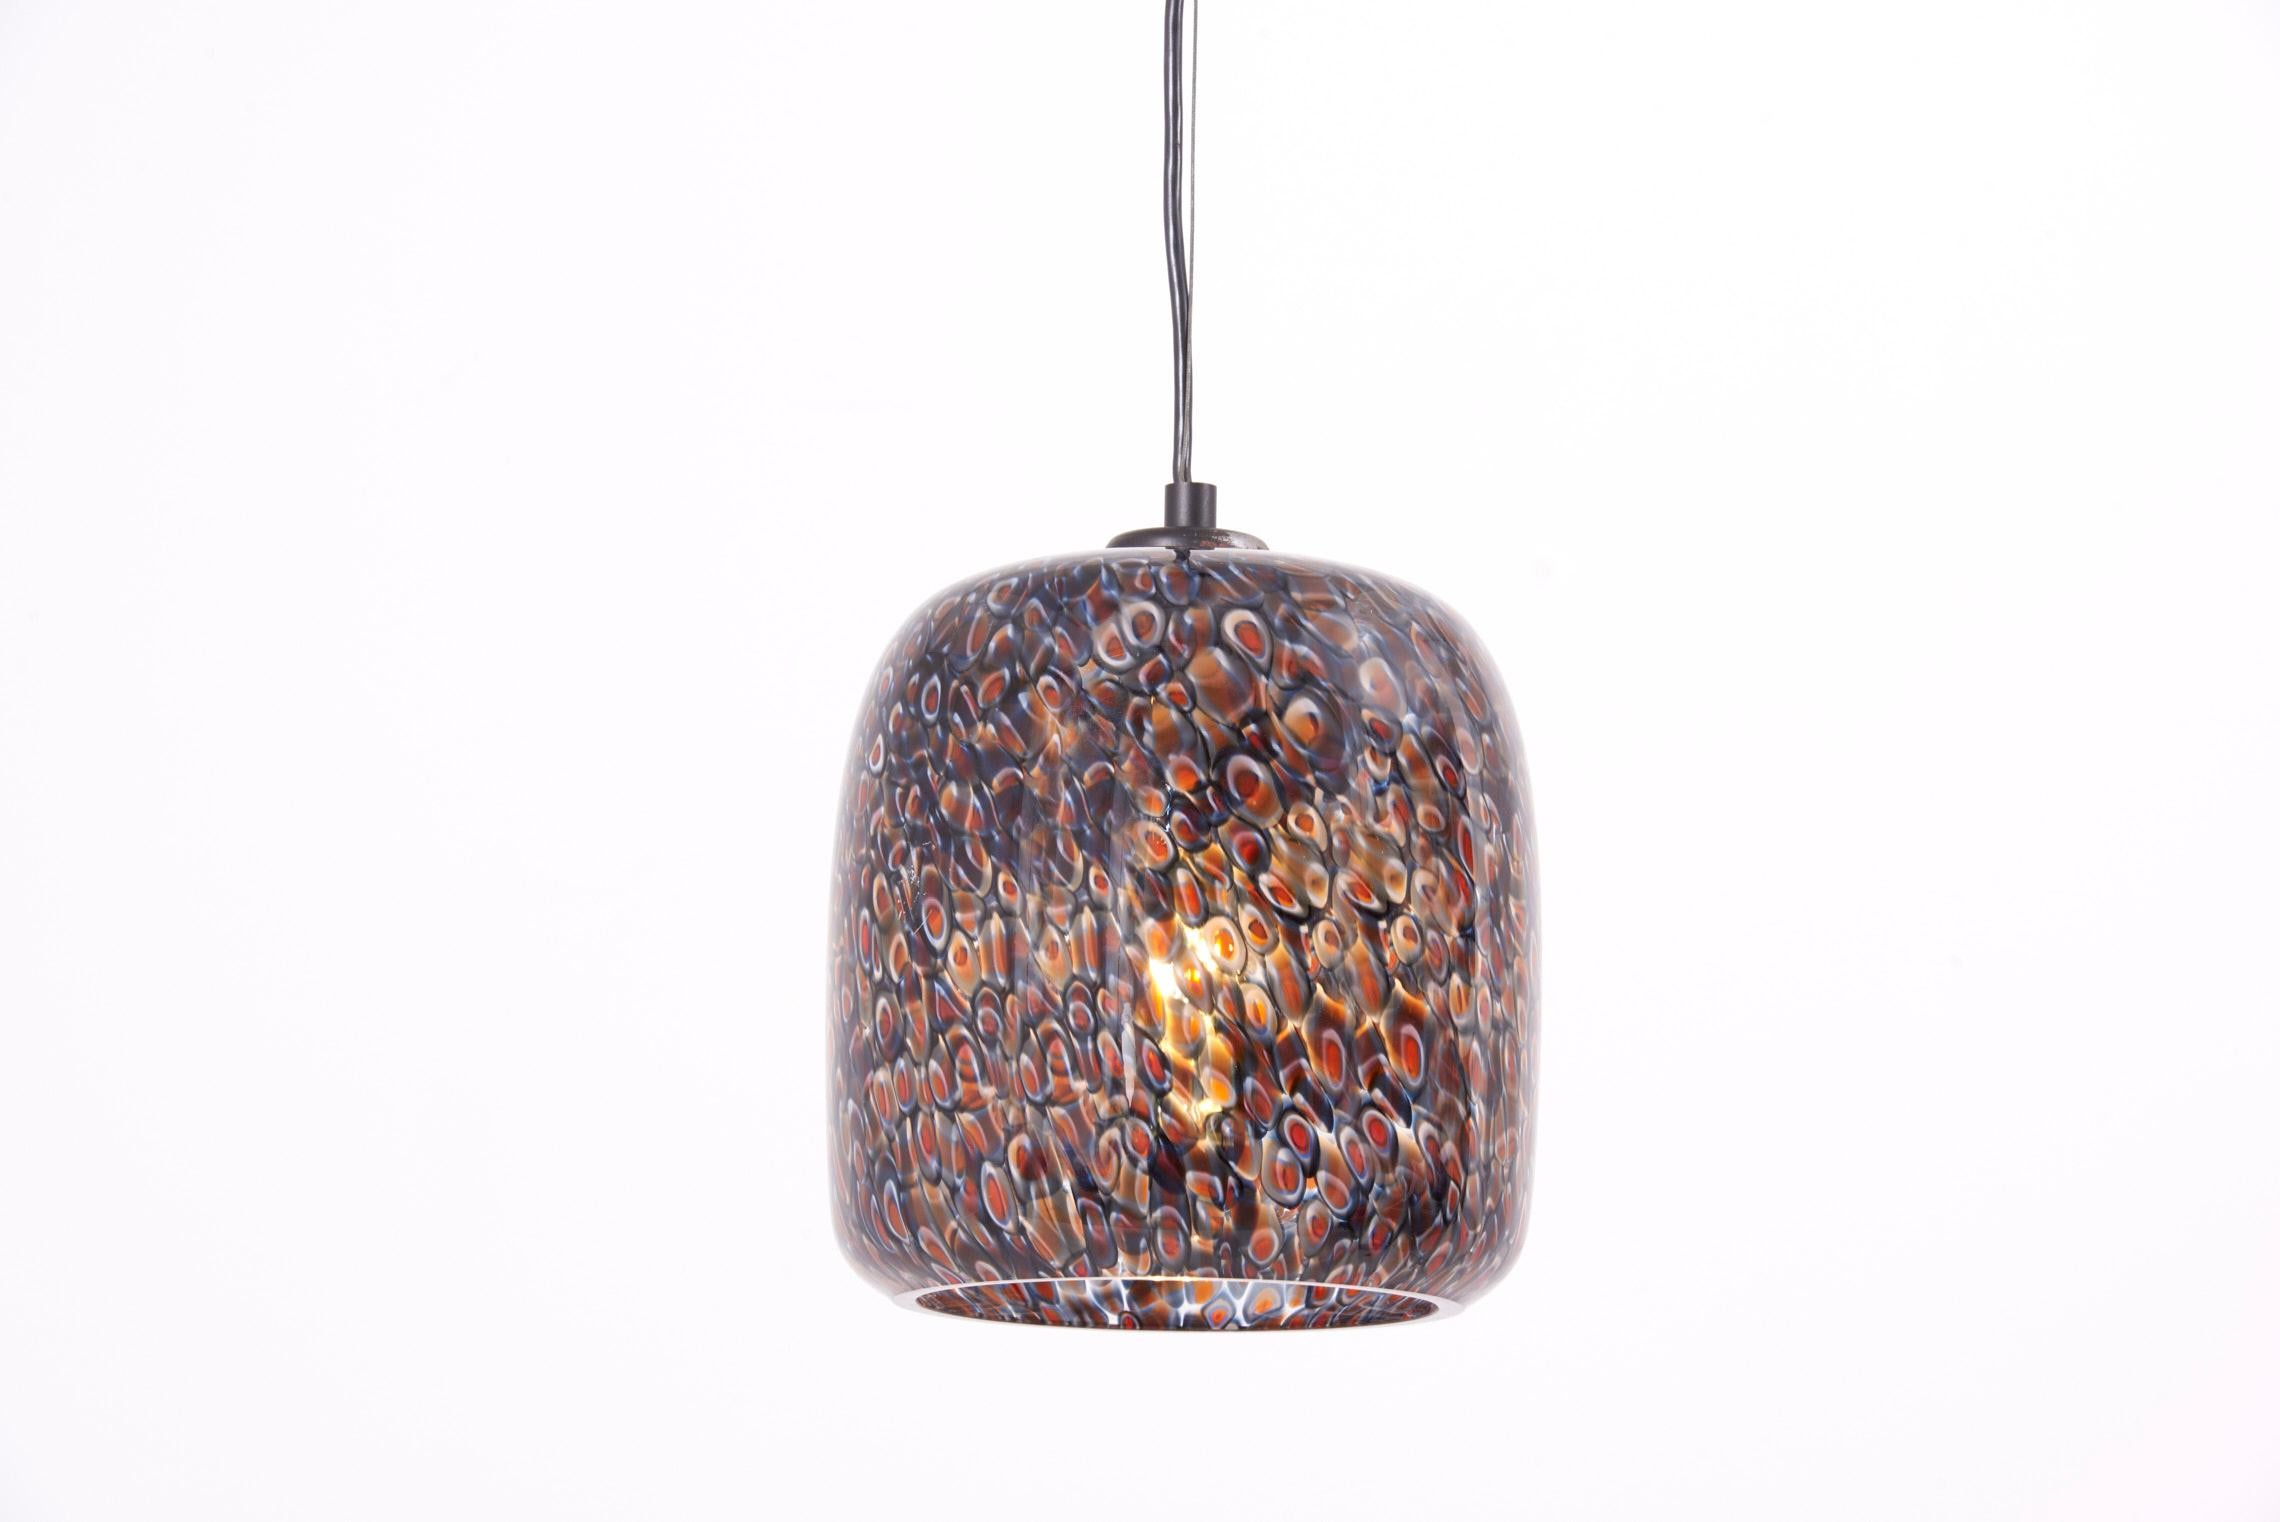 Late 20th Century Neverrino Glass Pendant Lamp by Gae Aulenti for Vistosi, Italy, 1970s